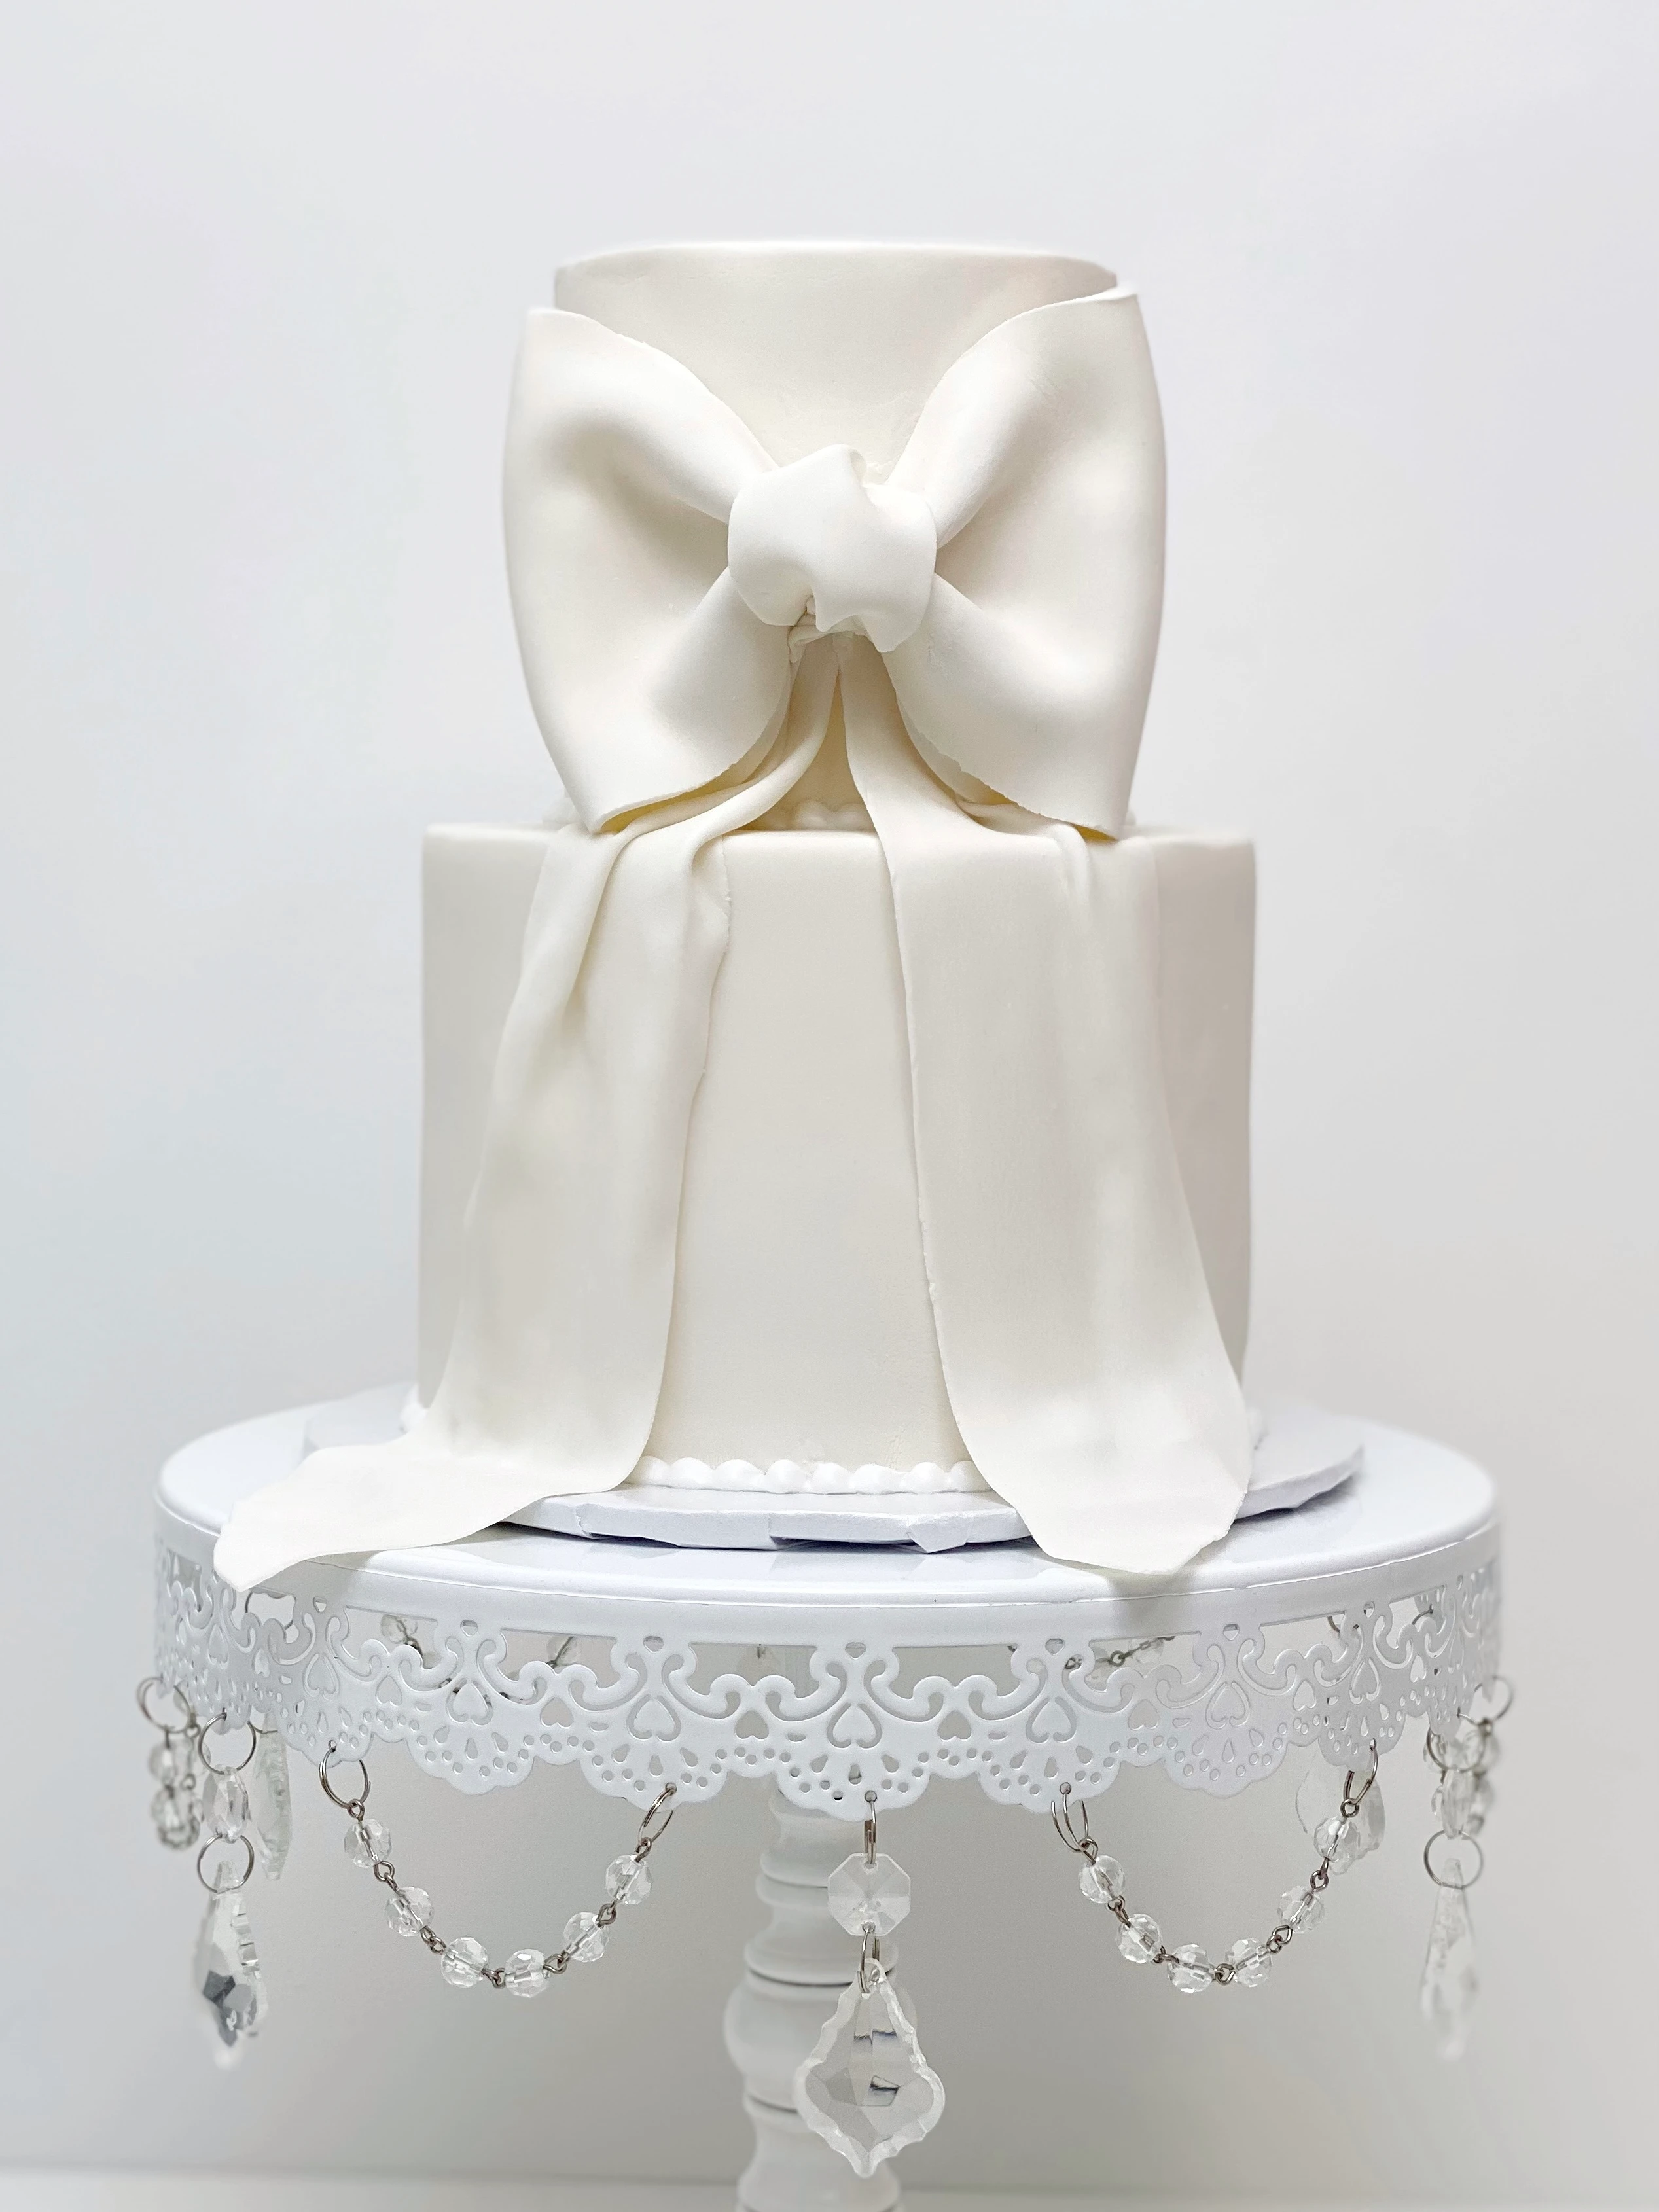 White ribbon cake on a white cake stand